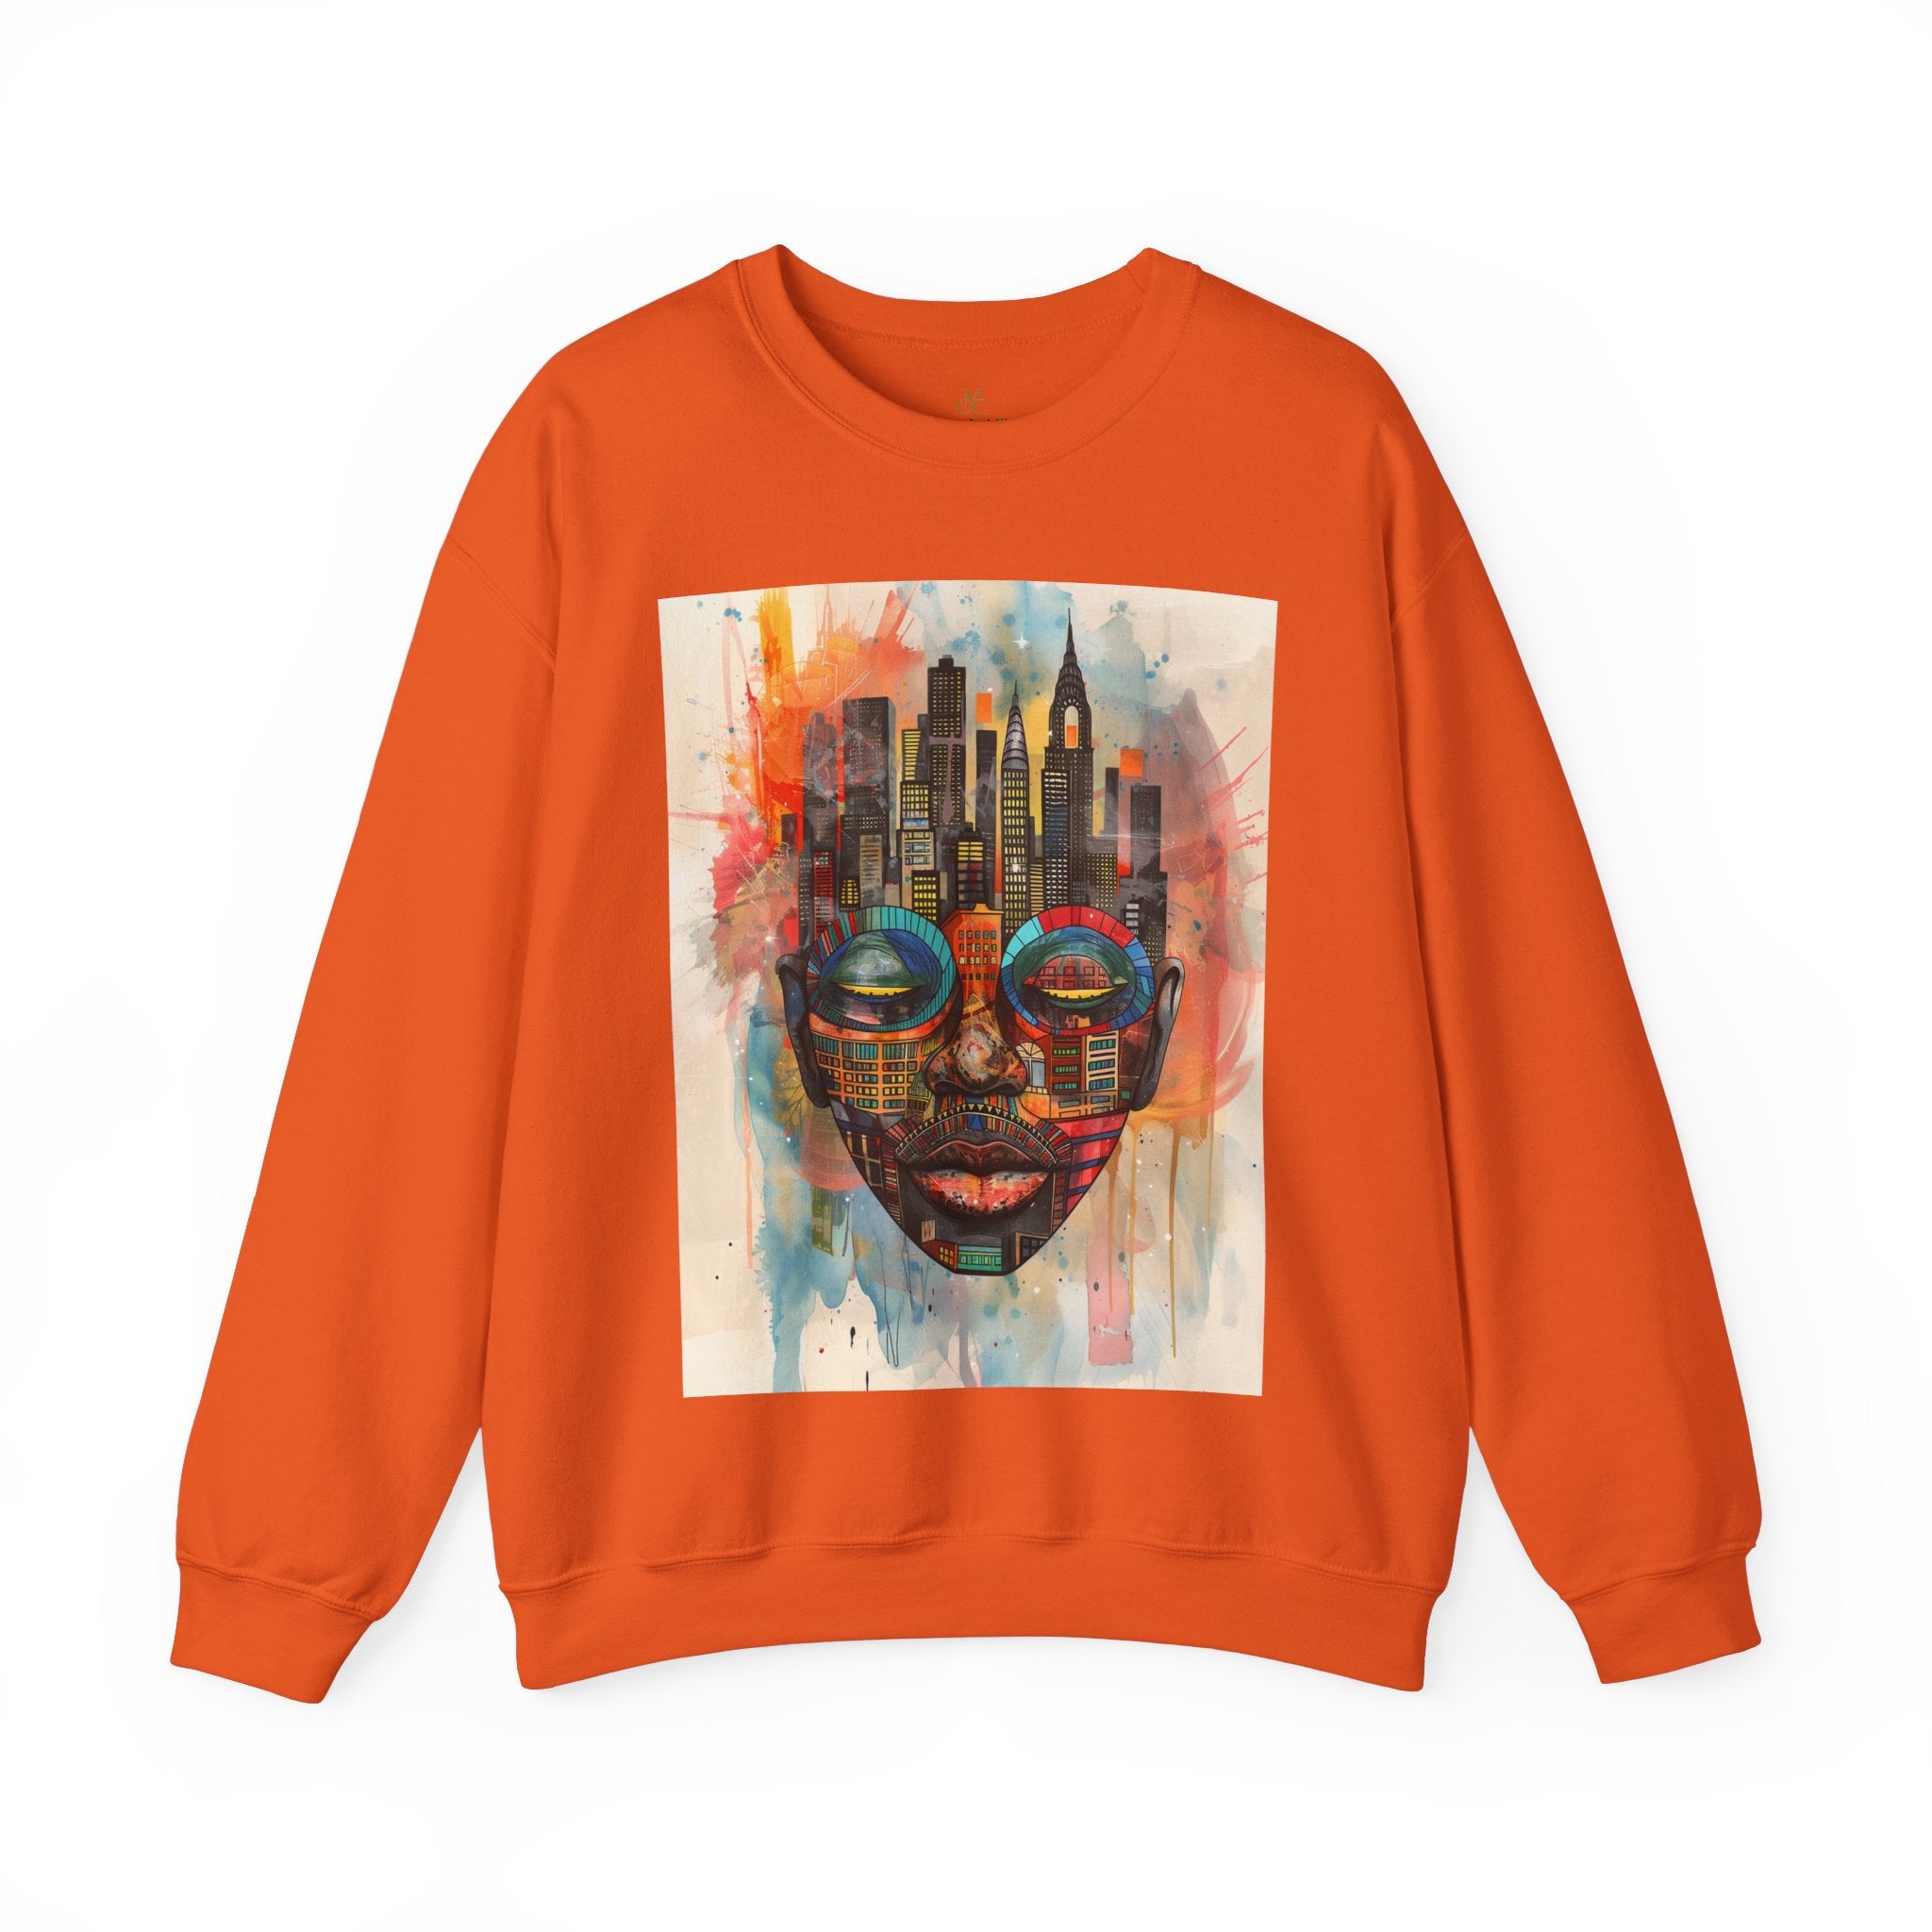 NYC African Mask Sweatshirt in orange.